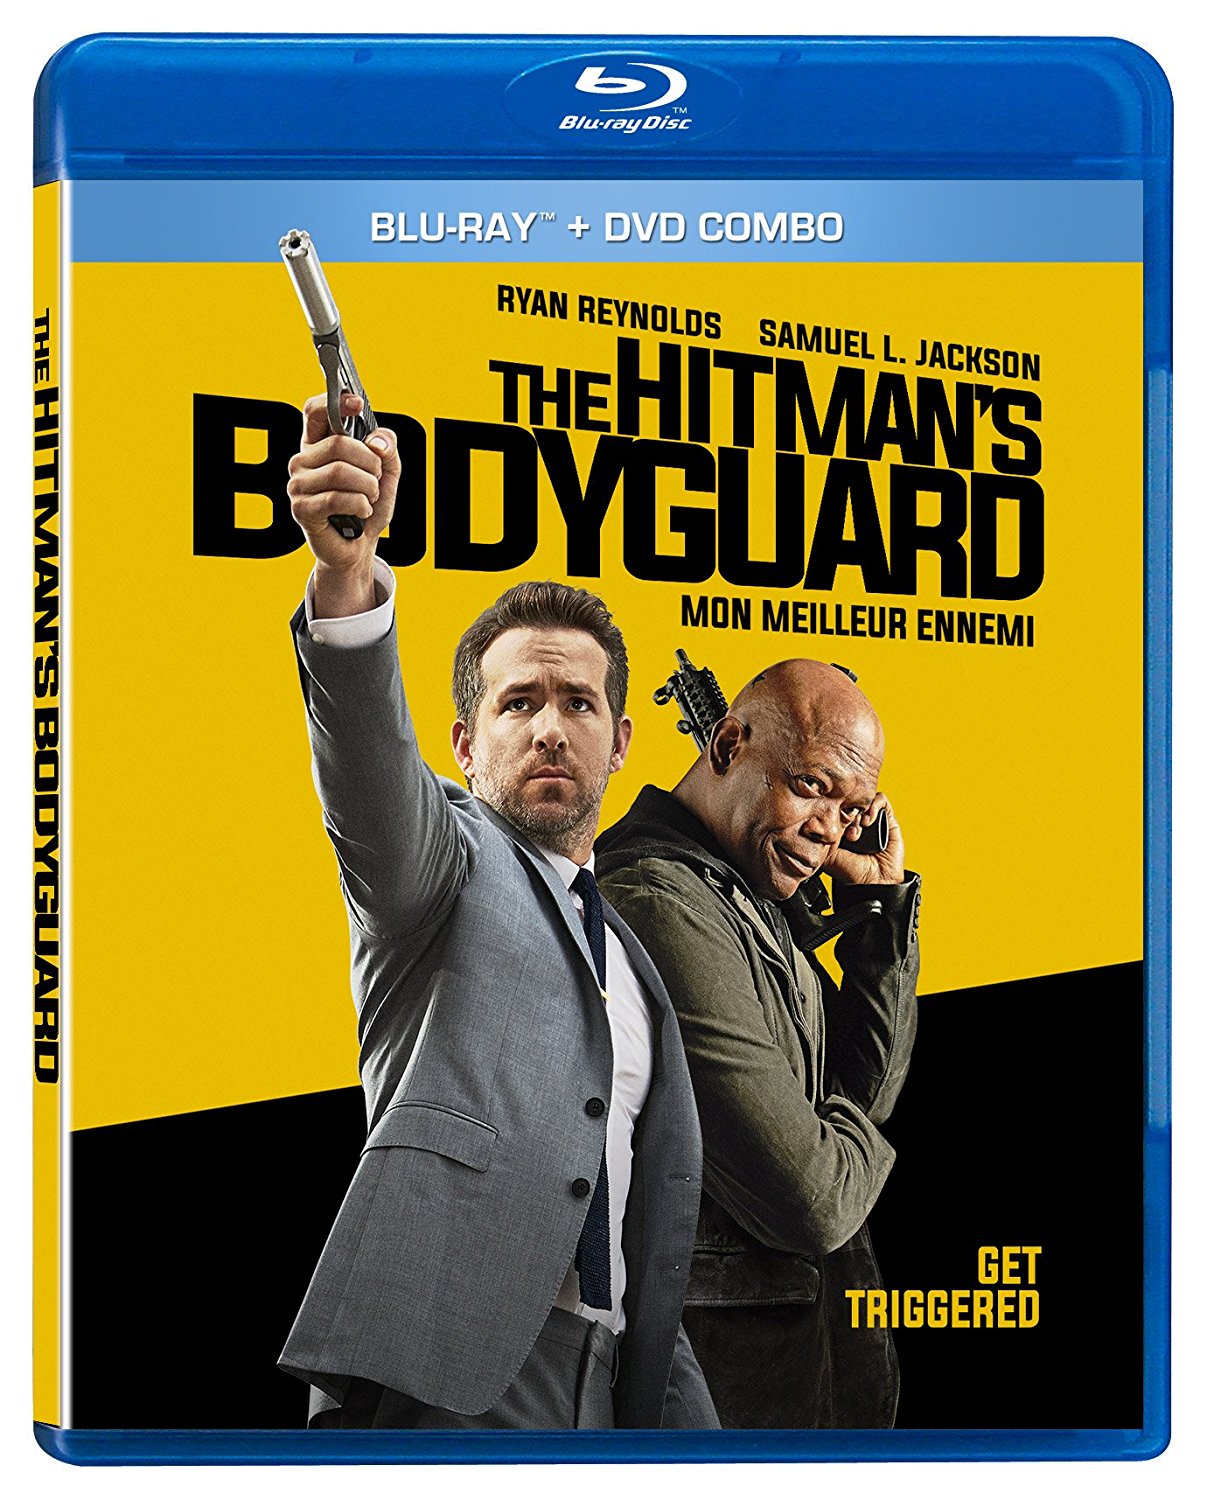 The Hitman's Bodyguard : 2 disc set BR & DVD.